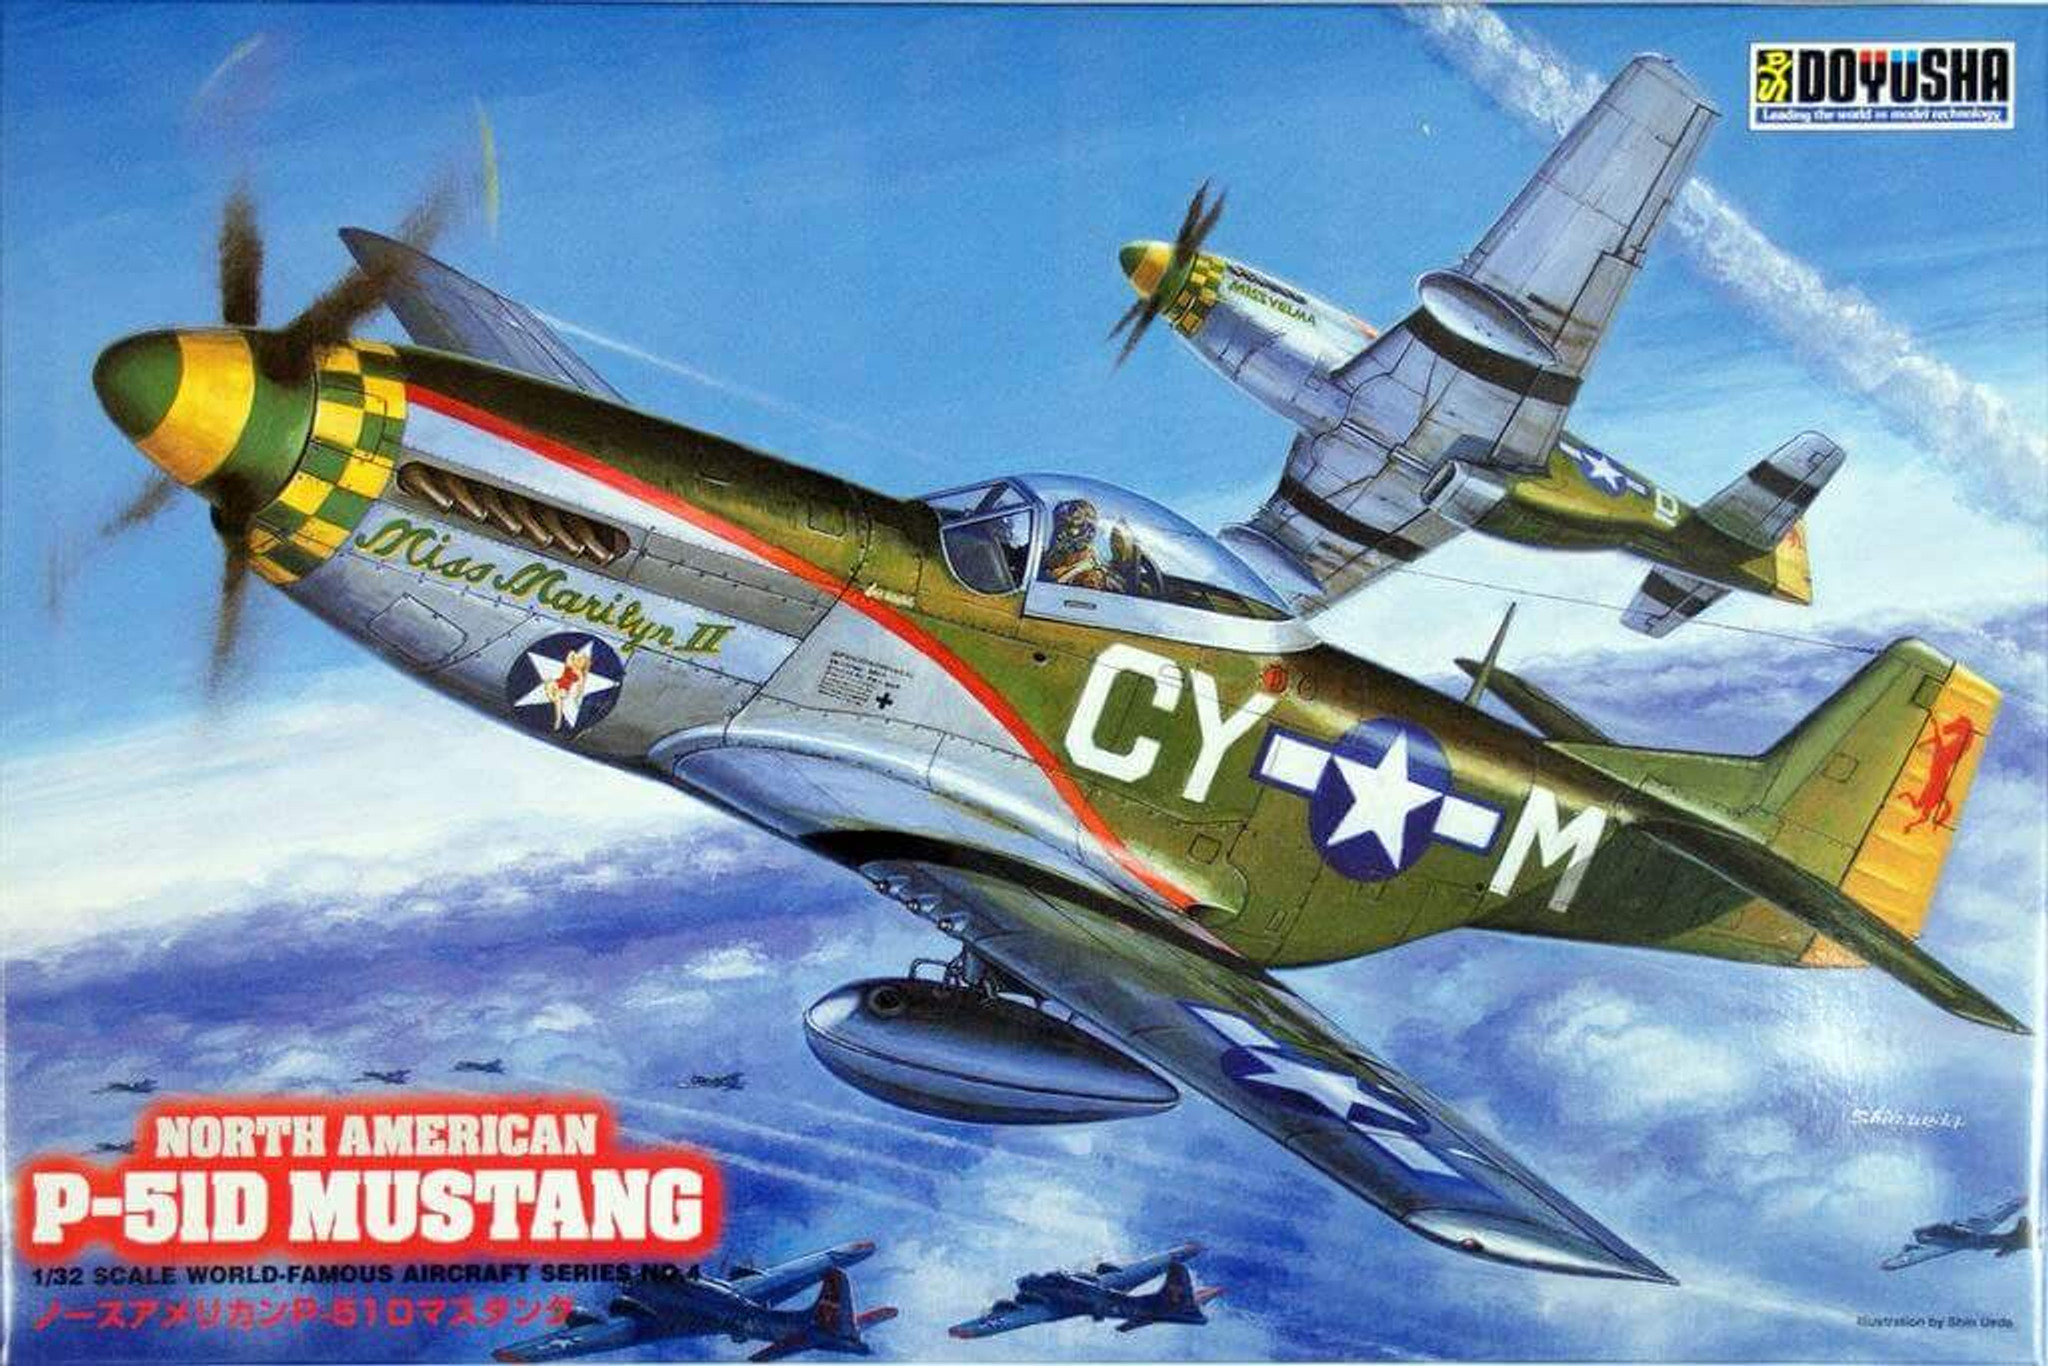 DOY32MUS DOYUSHA Model Kits 1/32nd P-51D MUSTANG